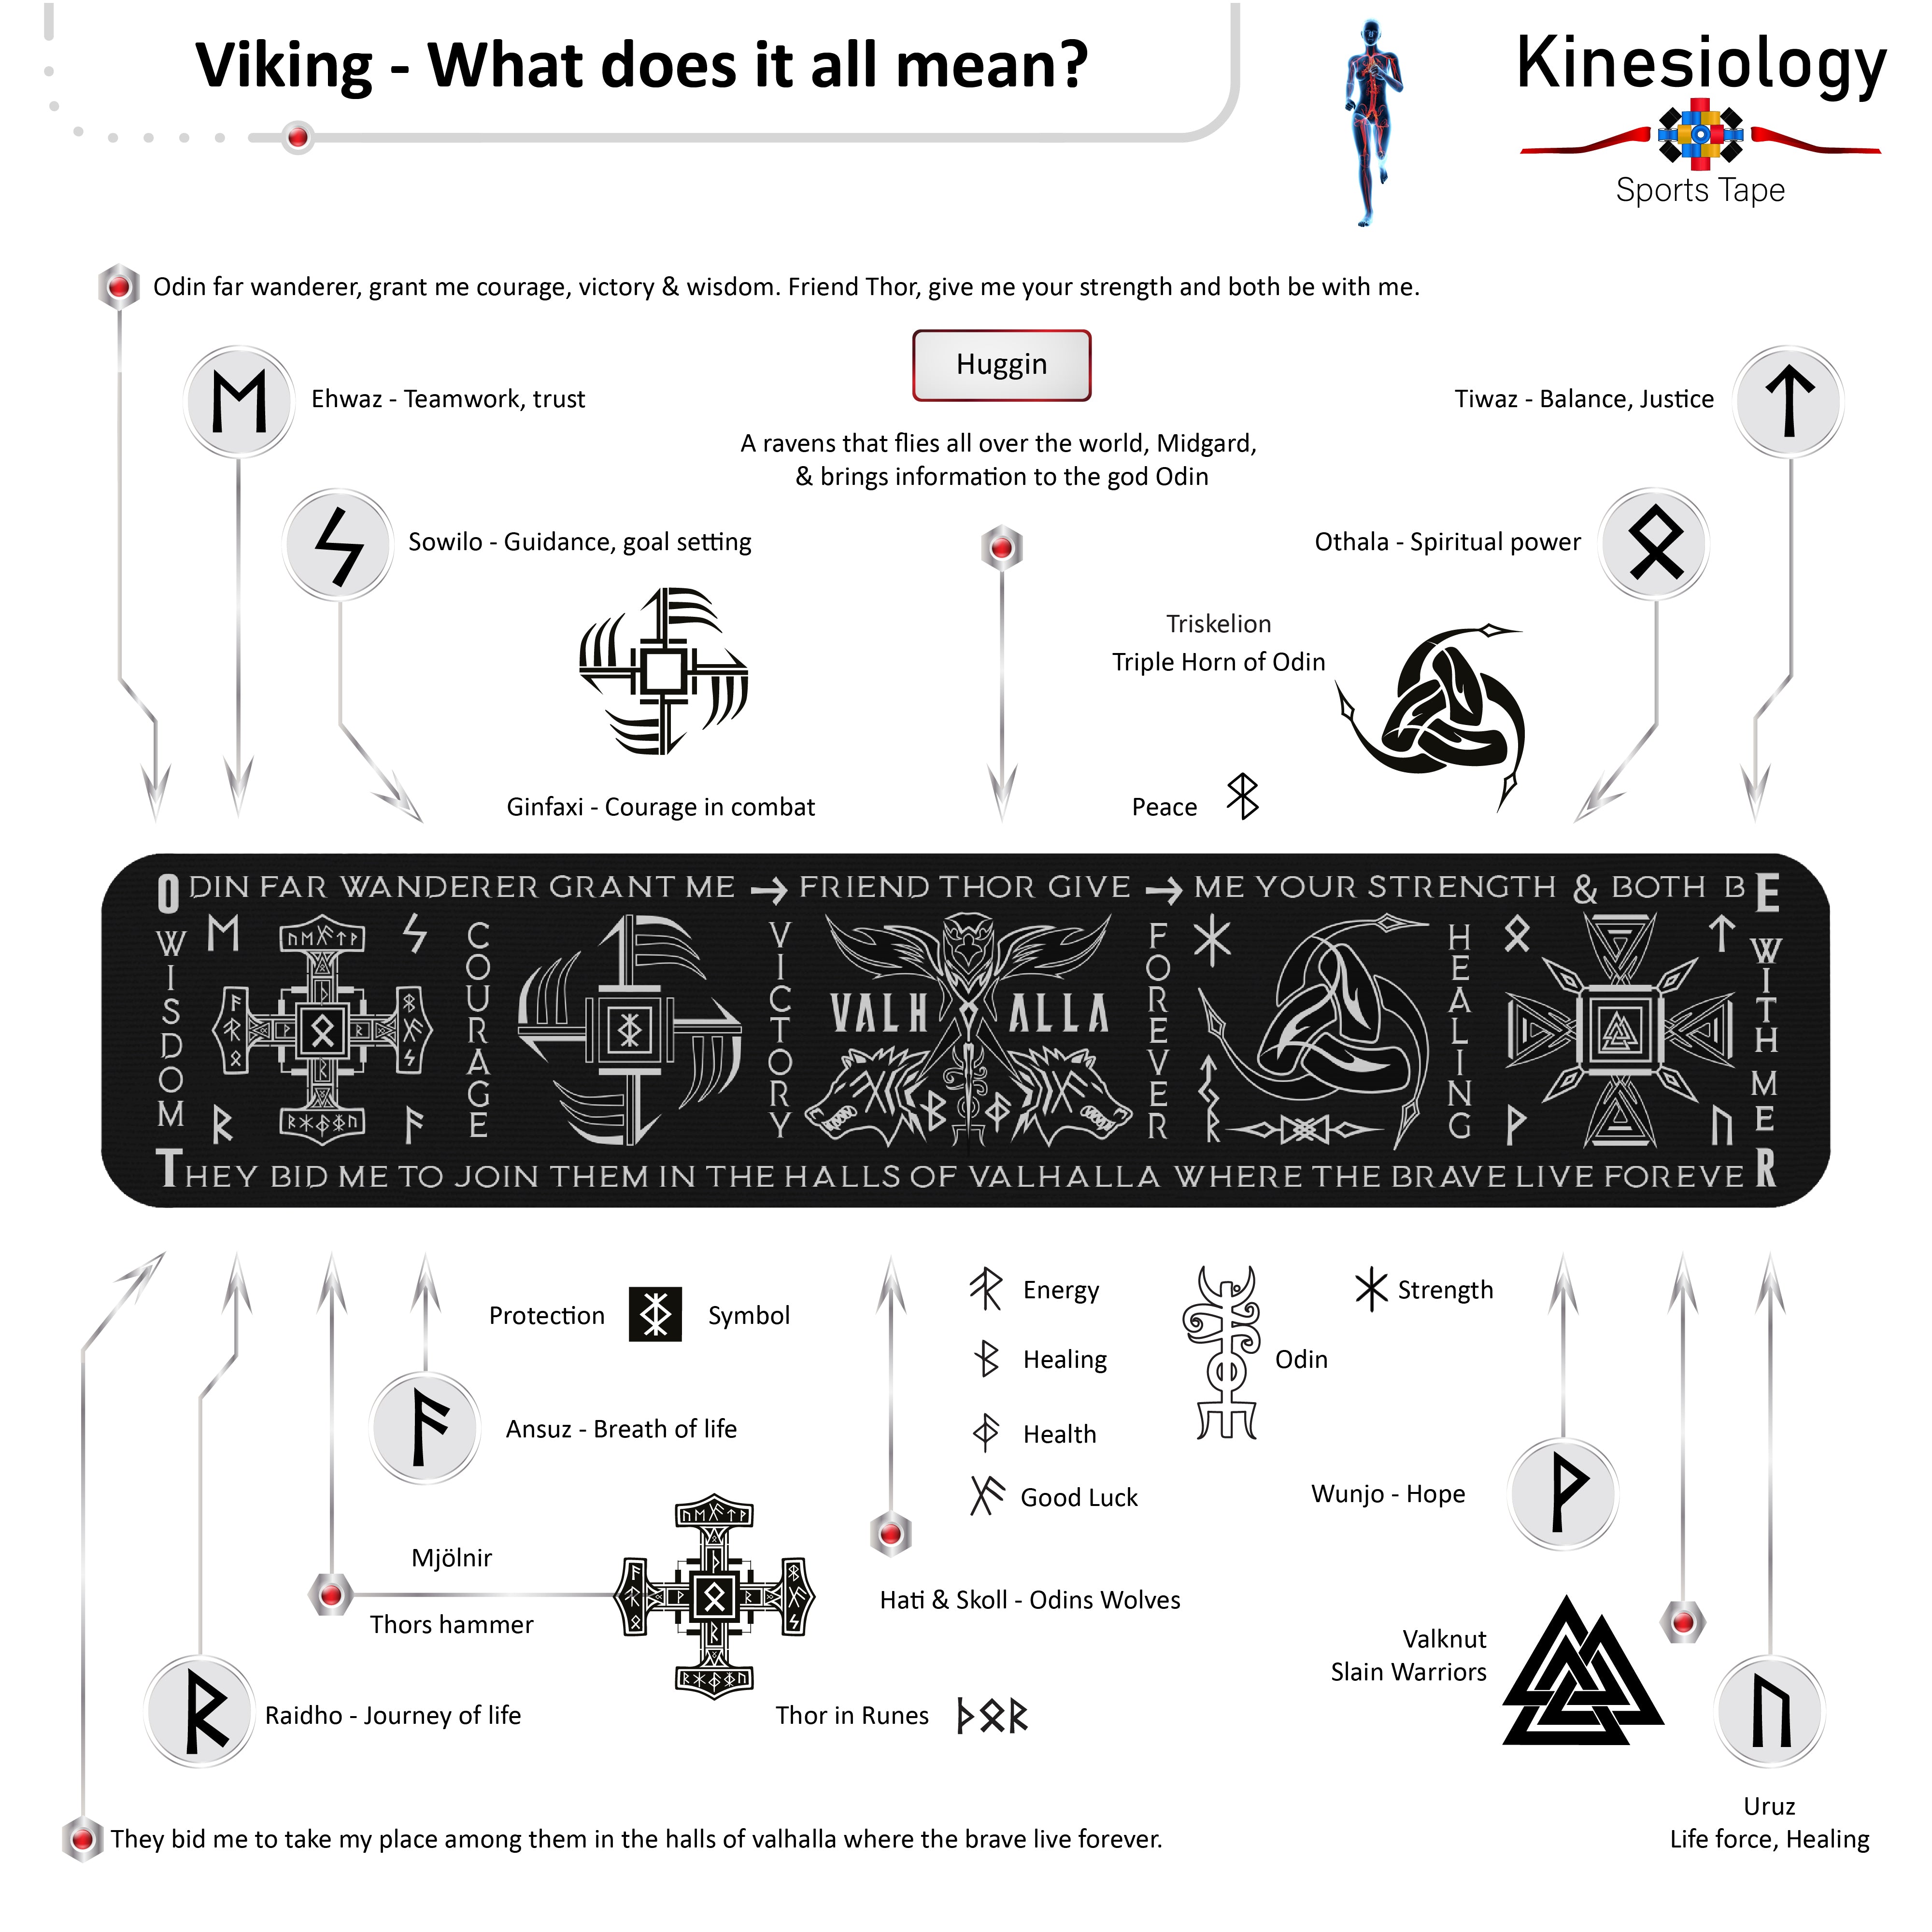 Black Kinesiology Tape Pre Cut with Dispenser - Talisman - Viking - Horizontal Design